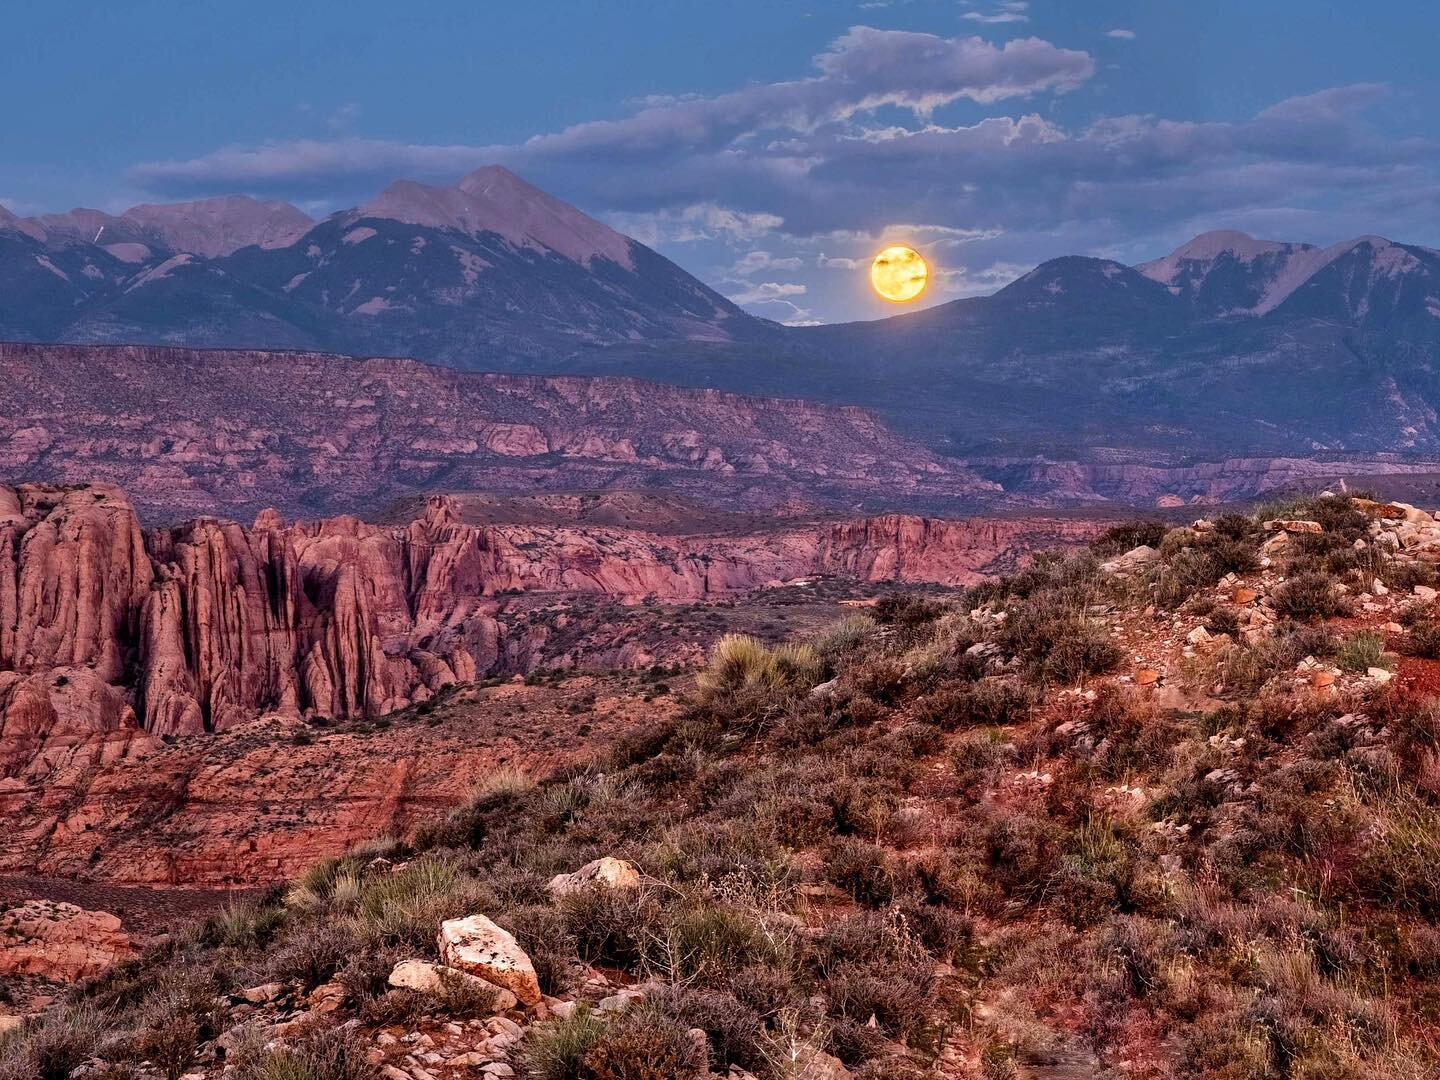 Harvest moon over Moab #moab #moon #clouds #sunset @Moab @overlandingphotography #moab #roadtrip #sandflats #photographer #photoadventure #photouradventures #rainbows @homewoodsuitesmoab @moabchamber @visitmoab @chamberofmoab @moabcity @visitmoab #mo